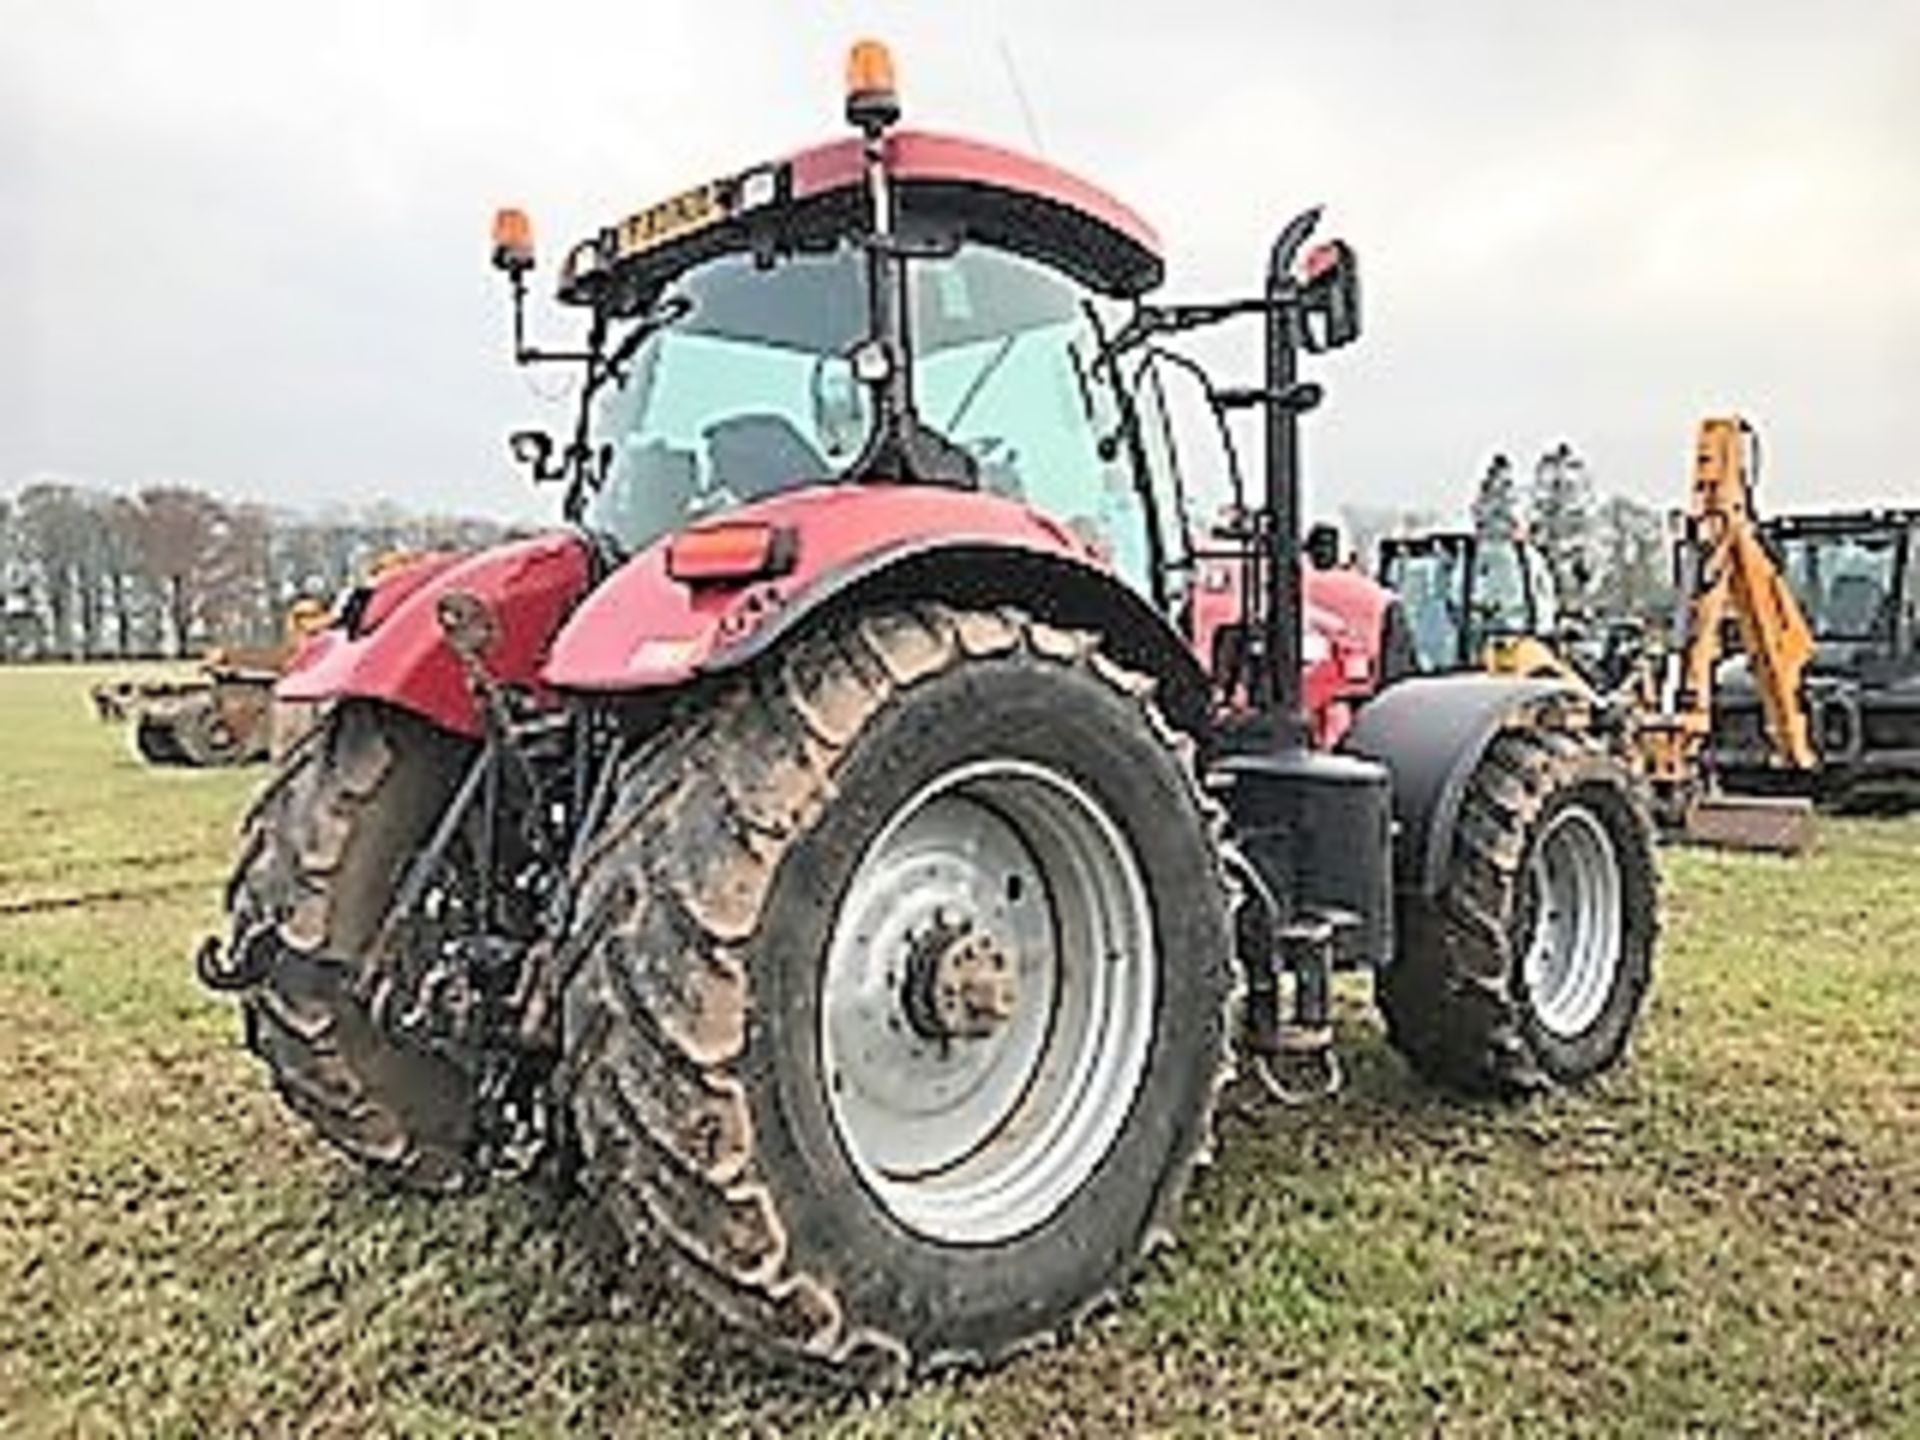 2013 CASE 230 PUMA 4ws tractor. Reg - FJ13HJD. 2742hrs (not verified) - Image 6 of 8